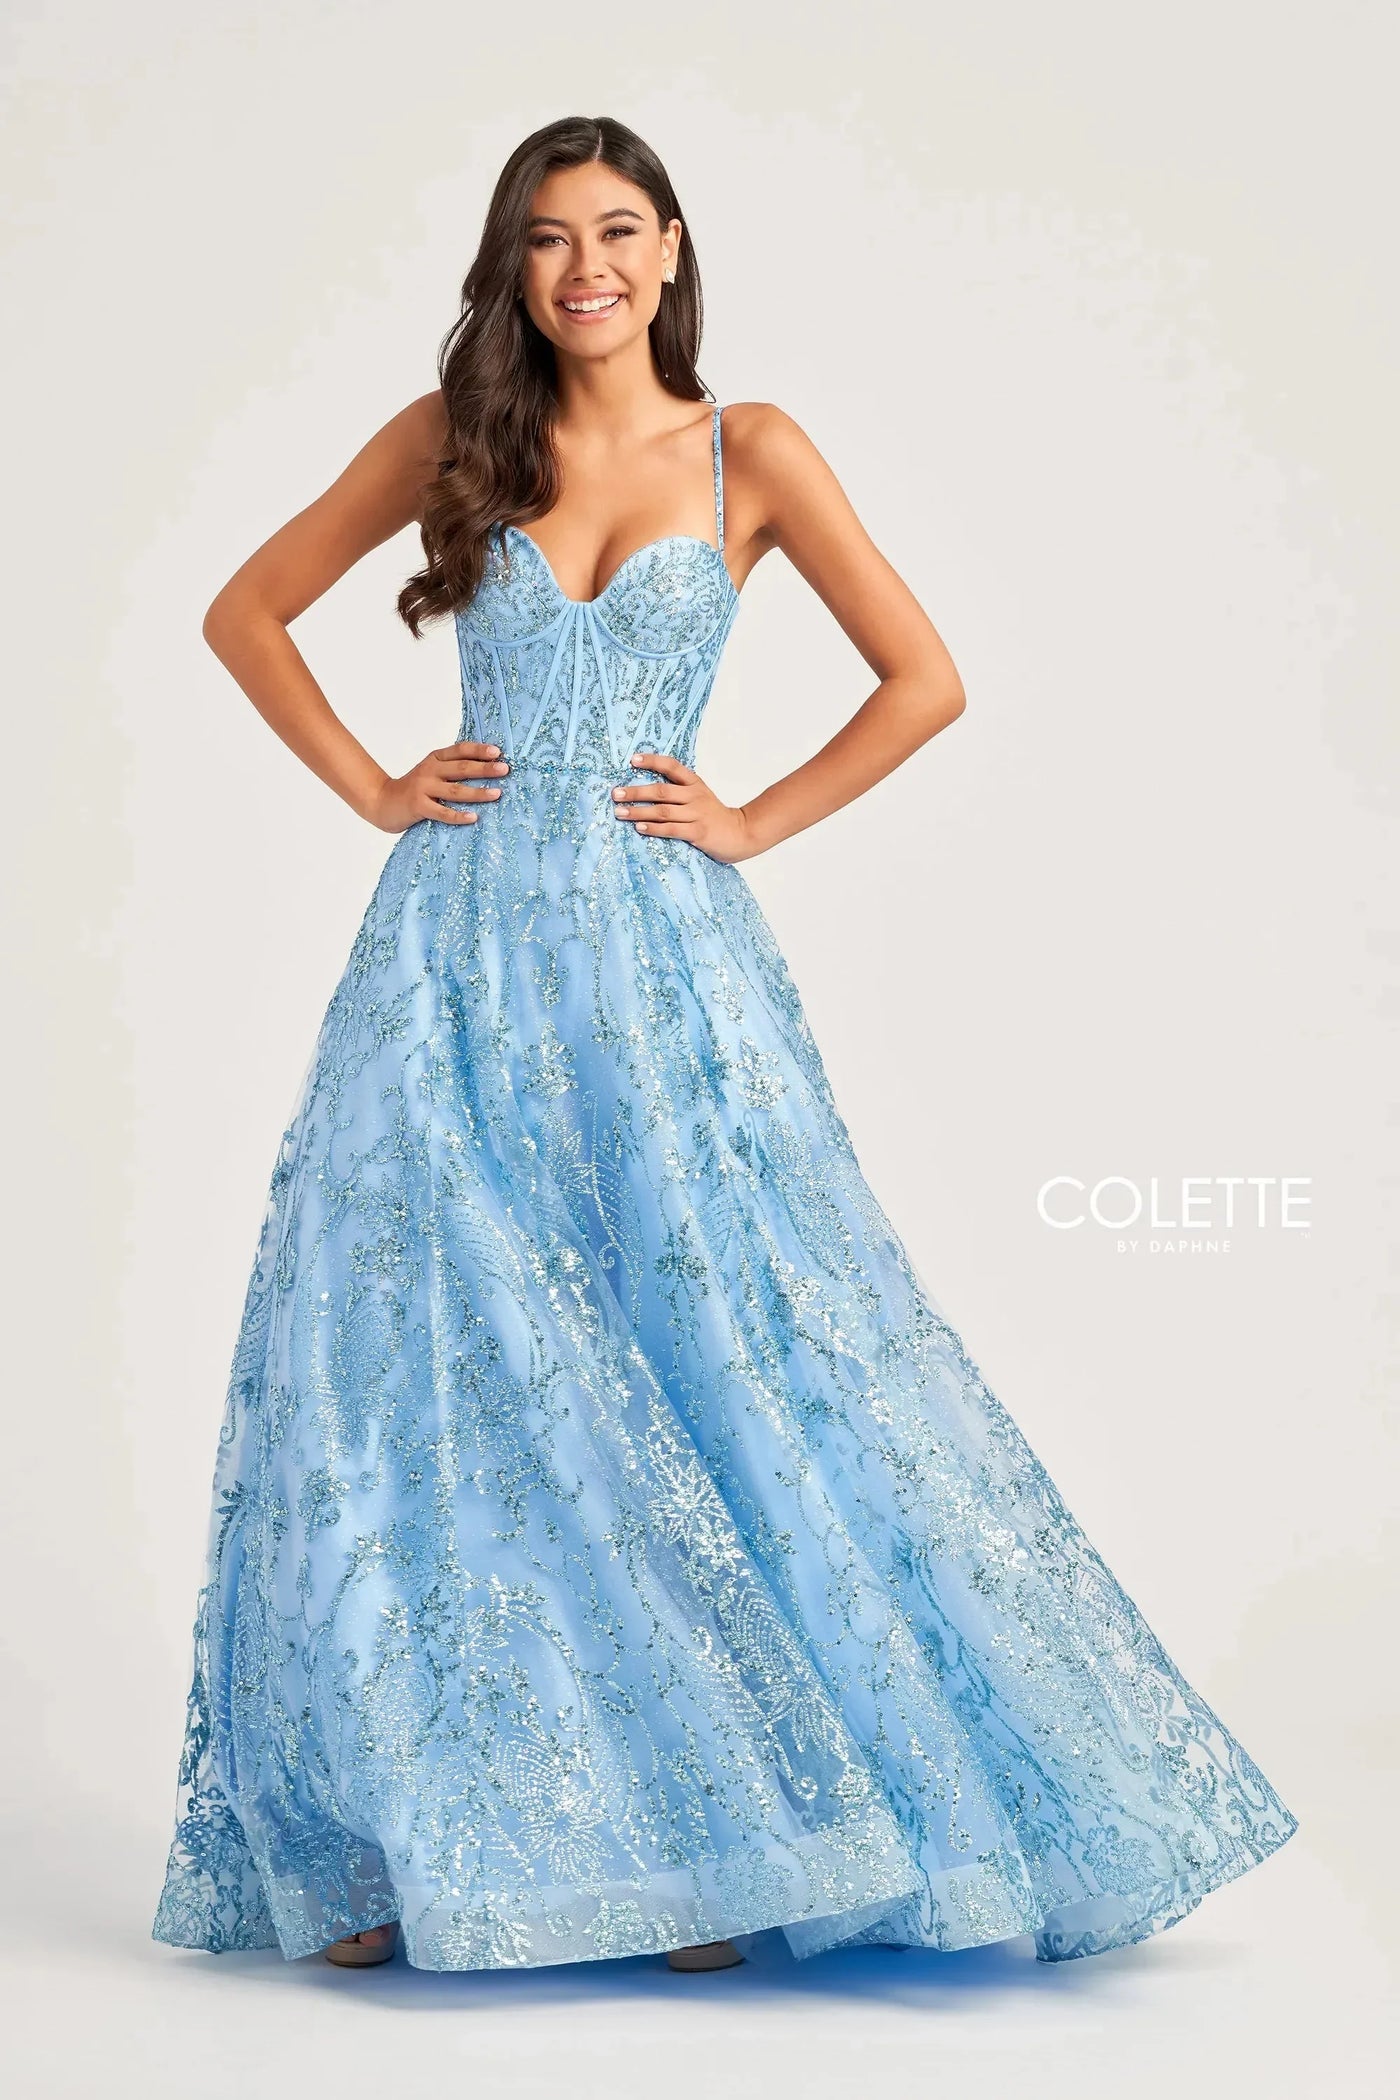 Colette By Daphne CL5117 - Shimmer Bustier Prom Dress